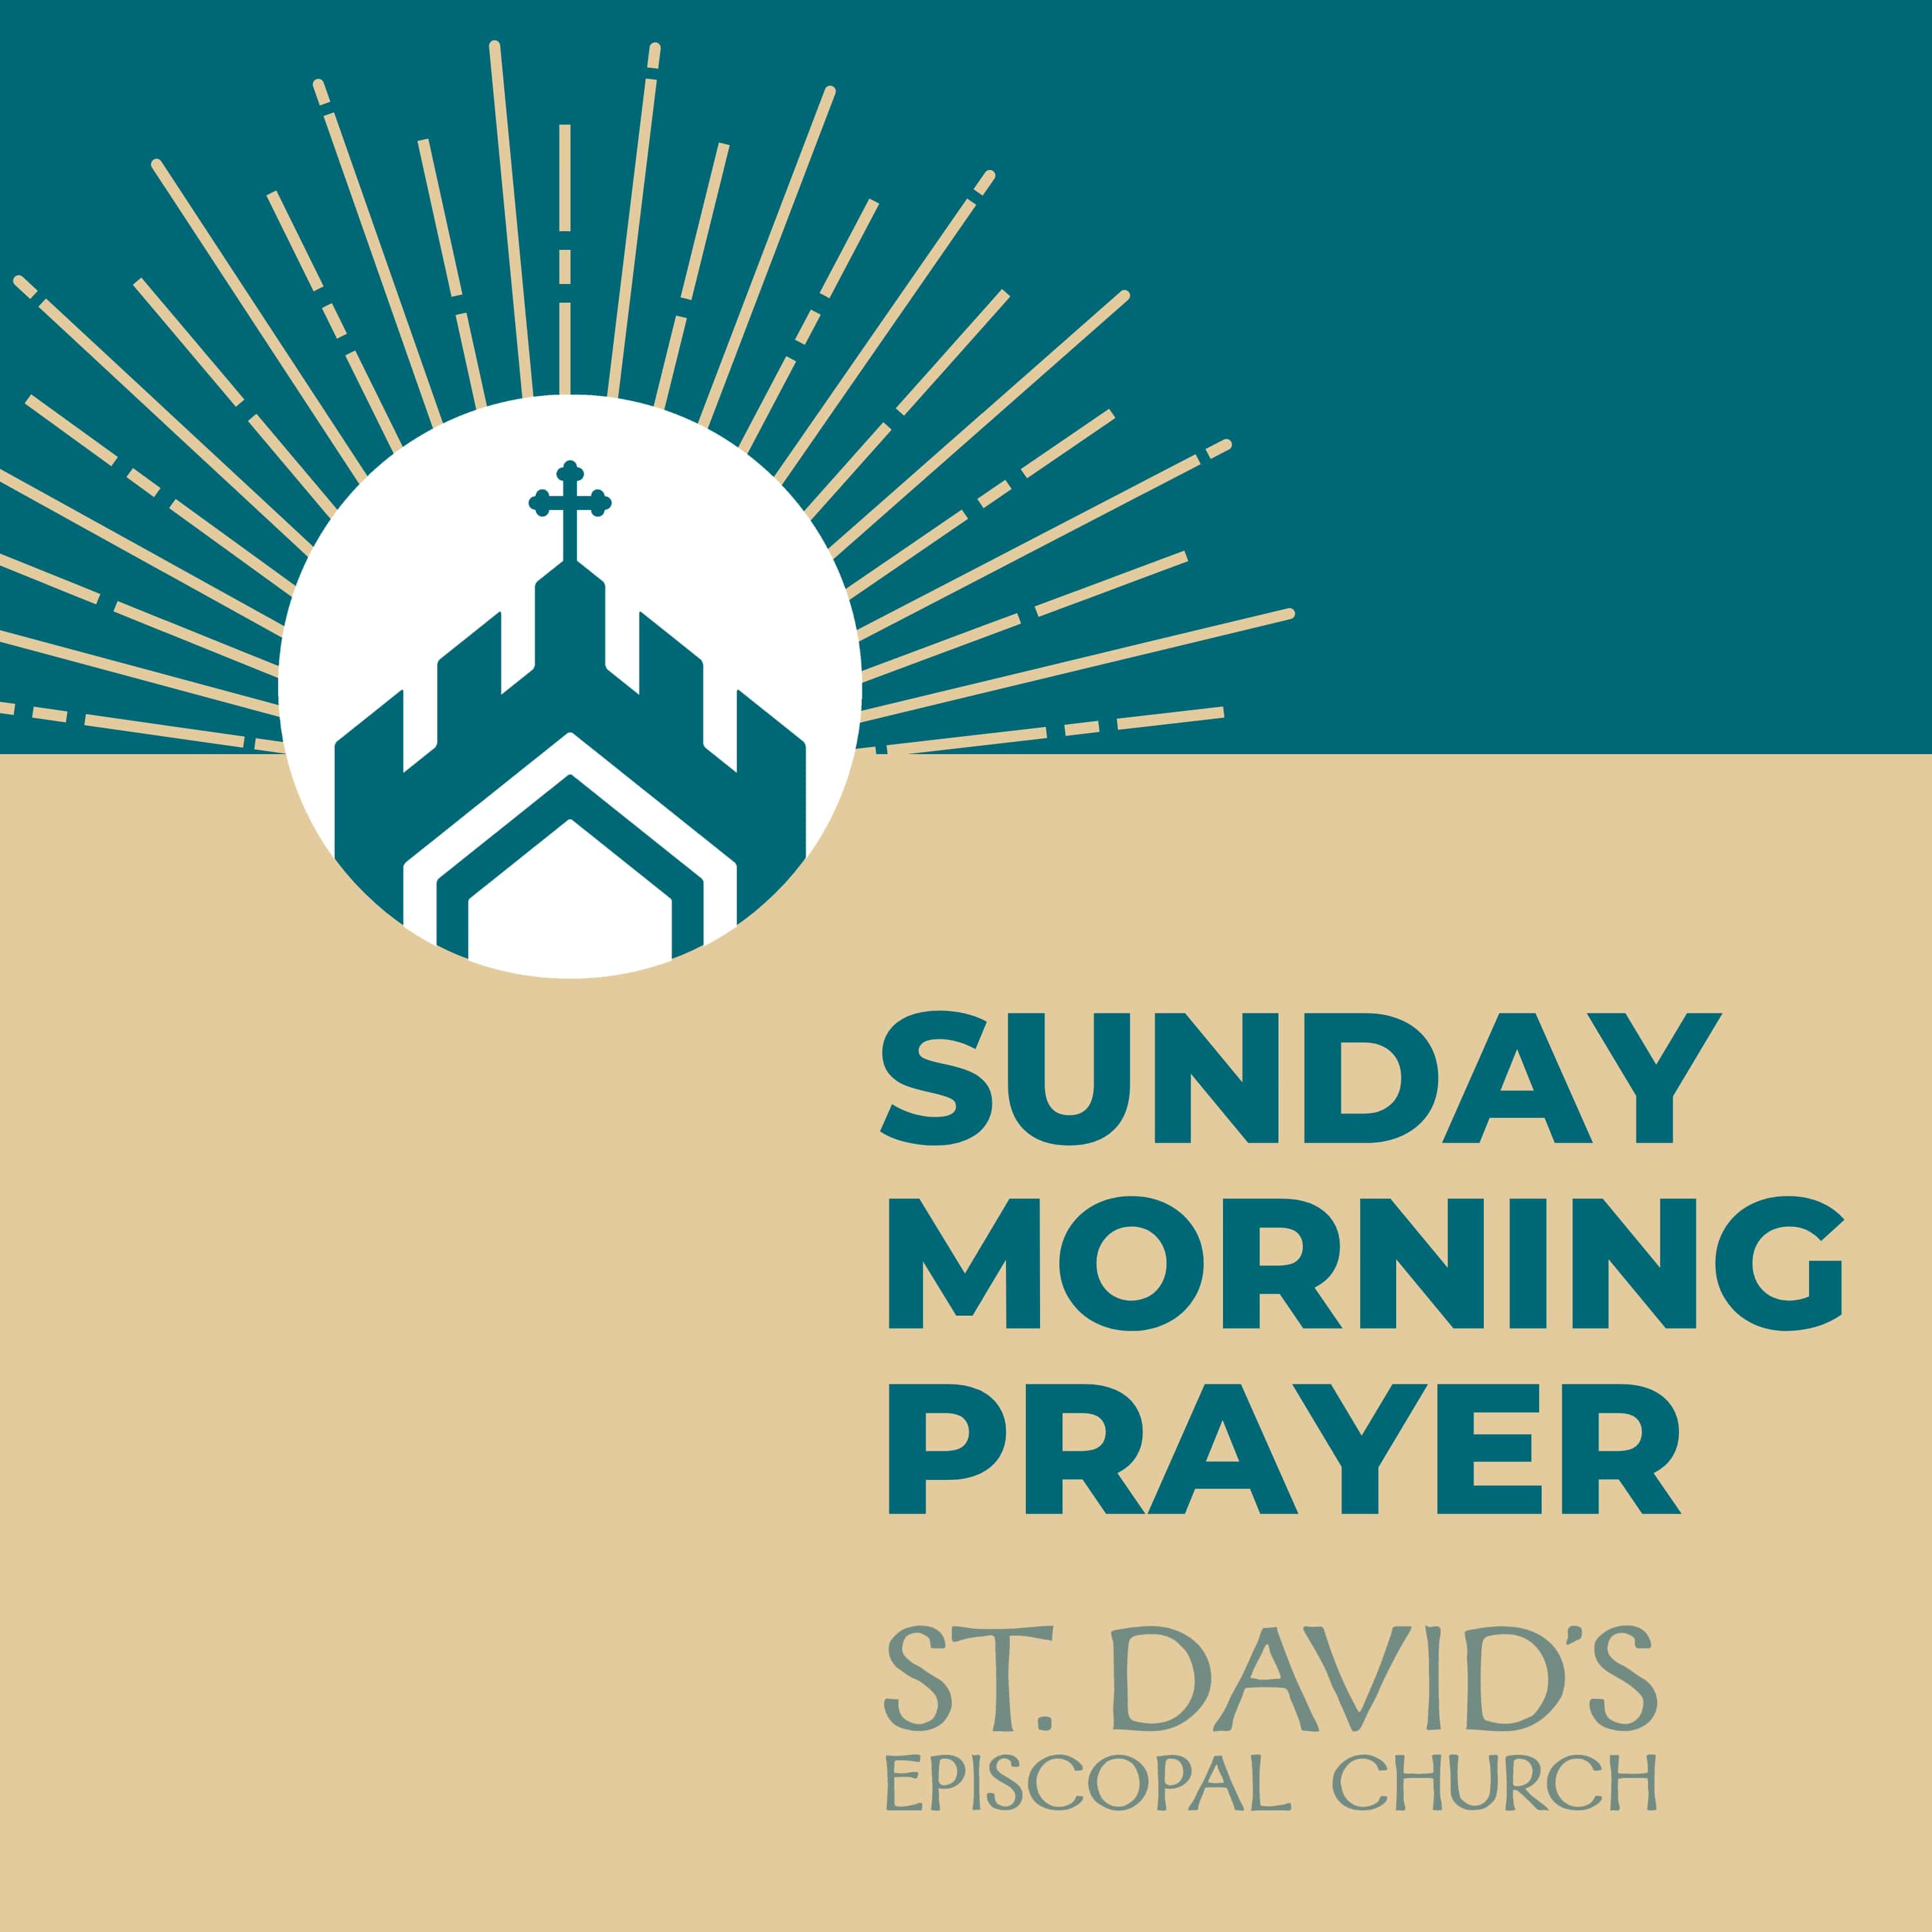 Sunday Morning Prayer: Rite Two, Year 2, 18th Sunday after Pentecost